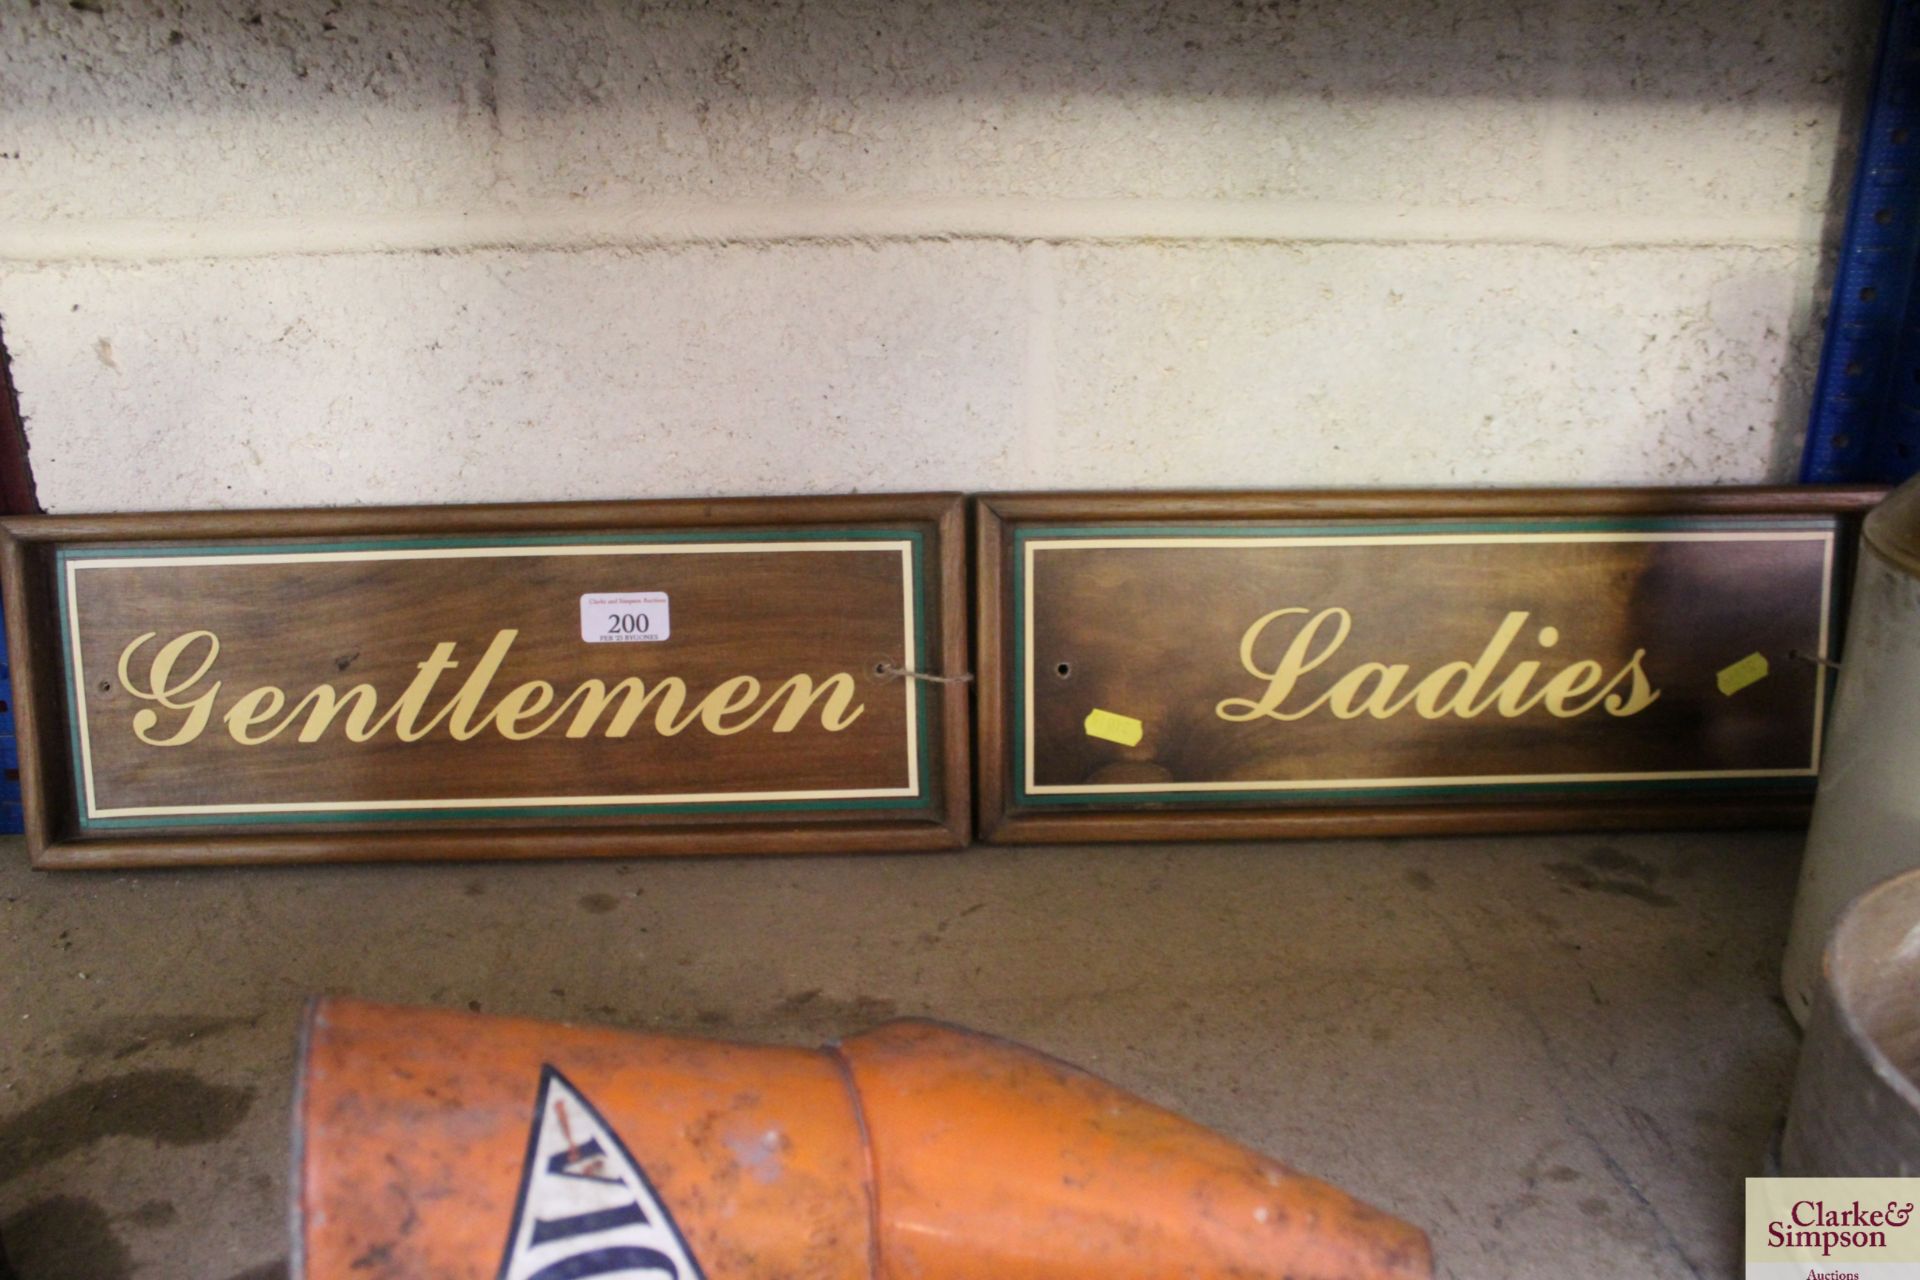 "Ladies and Gentleman's" signs